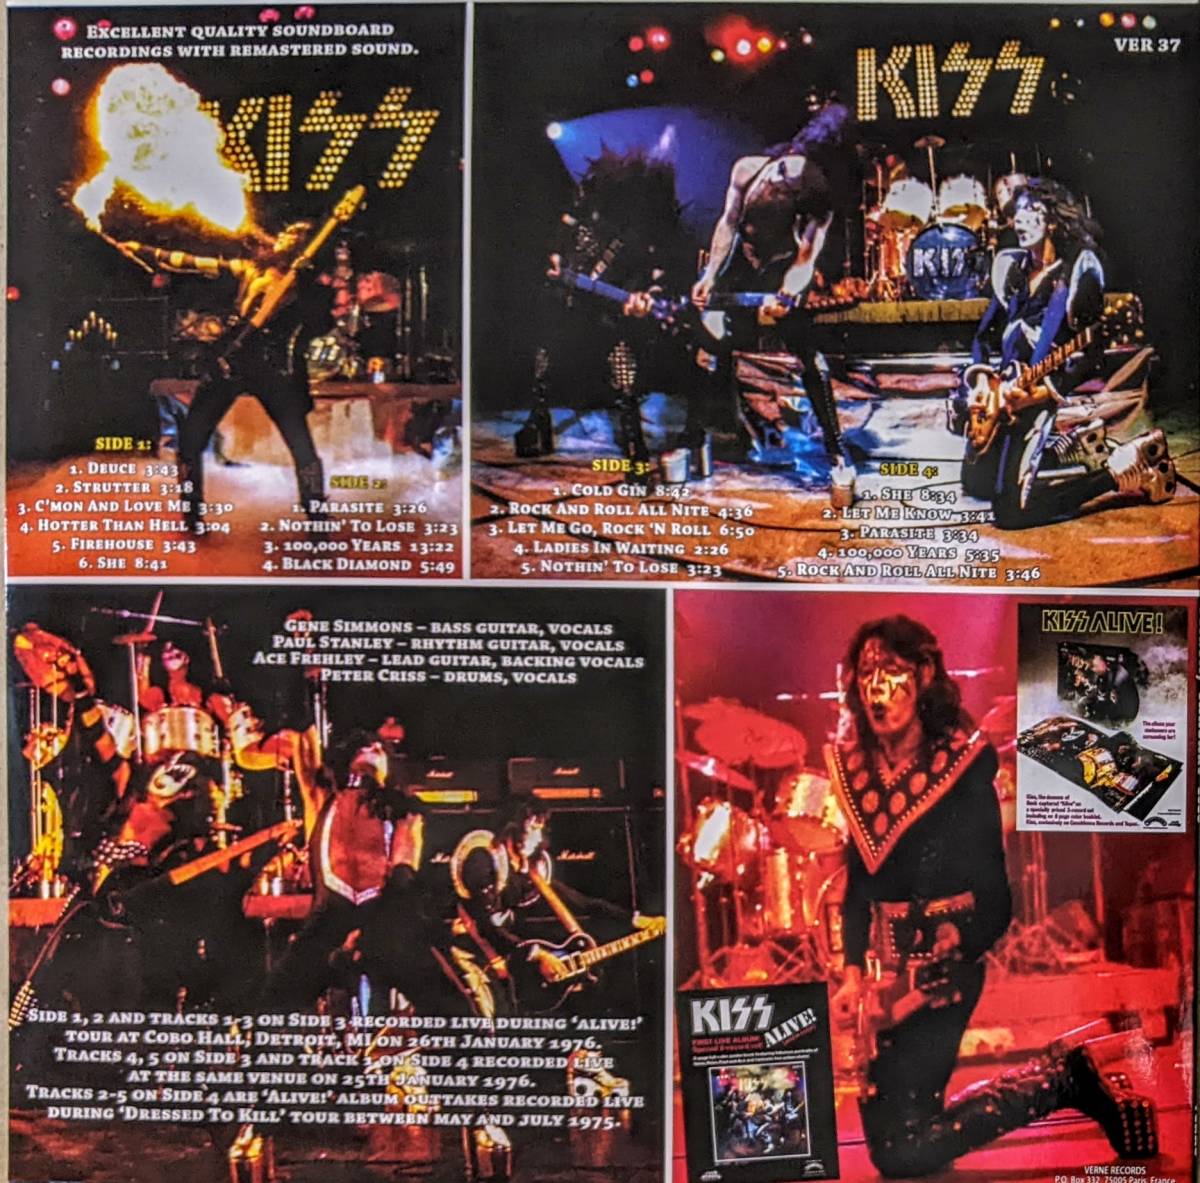 Kiss キッス - Alive! In Detroit, January 1976 限定二枚組アナログ・レコード